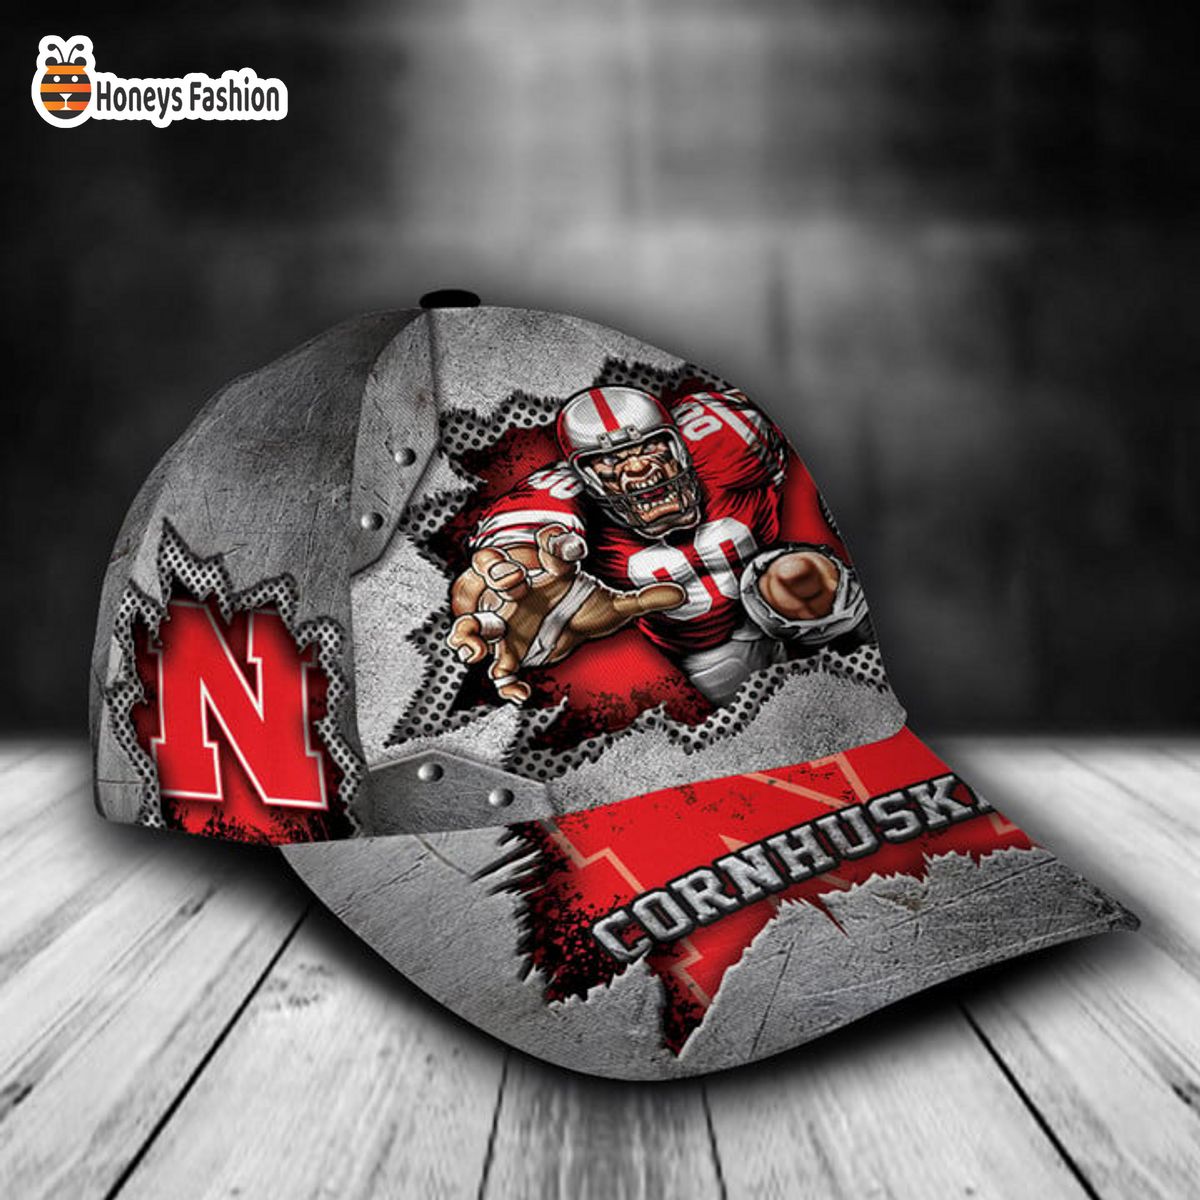 Nebraska Cornhuskers mascot custom name classic cap